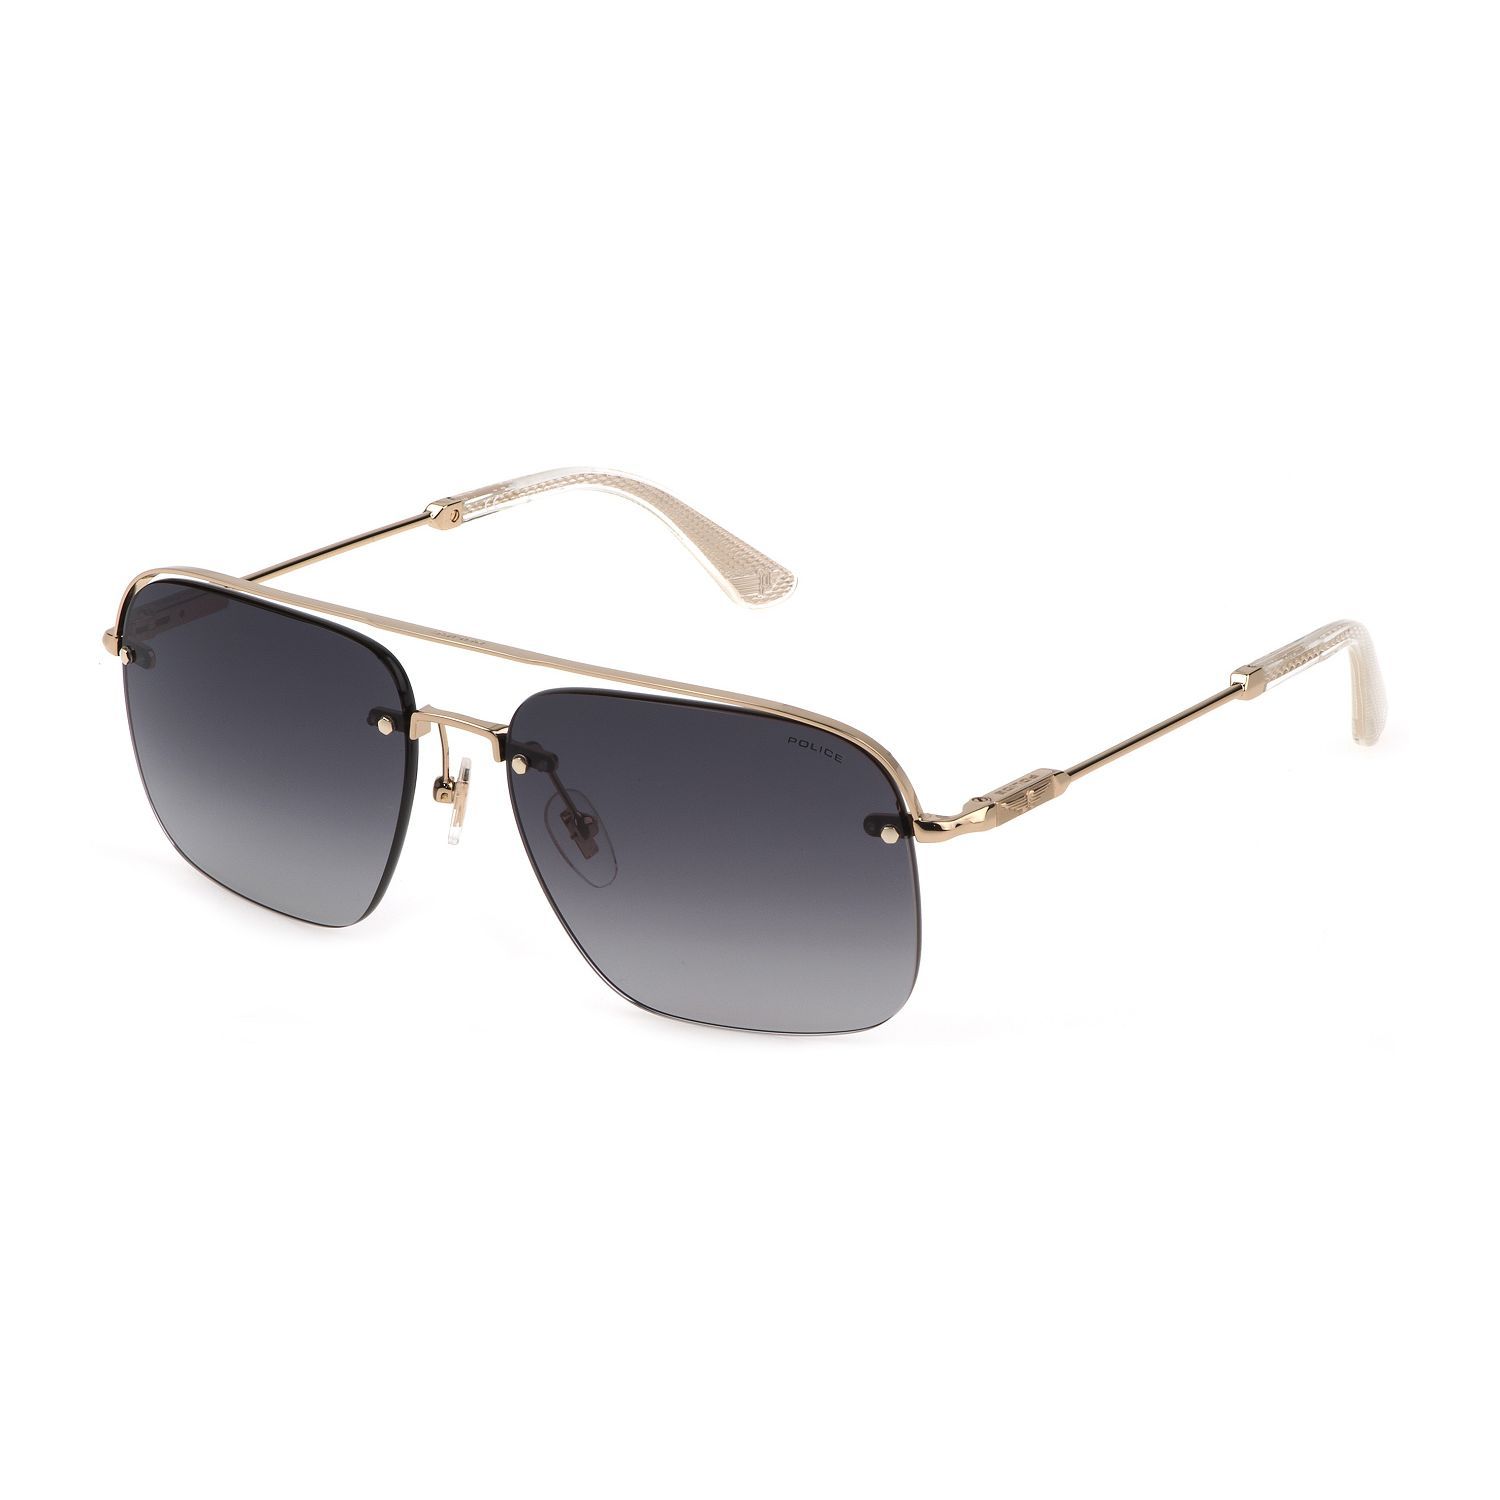 SPLF72M Square Sunglasses 300 - size 59